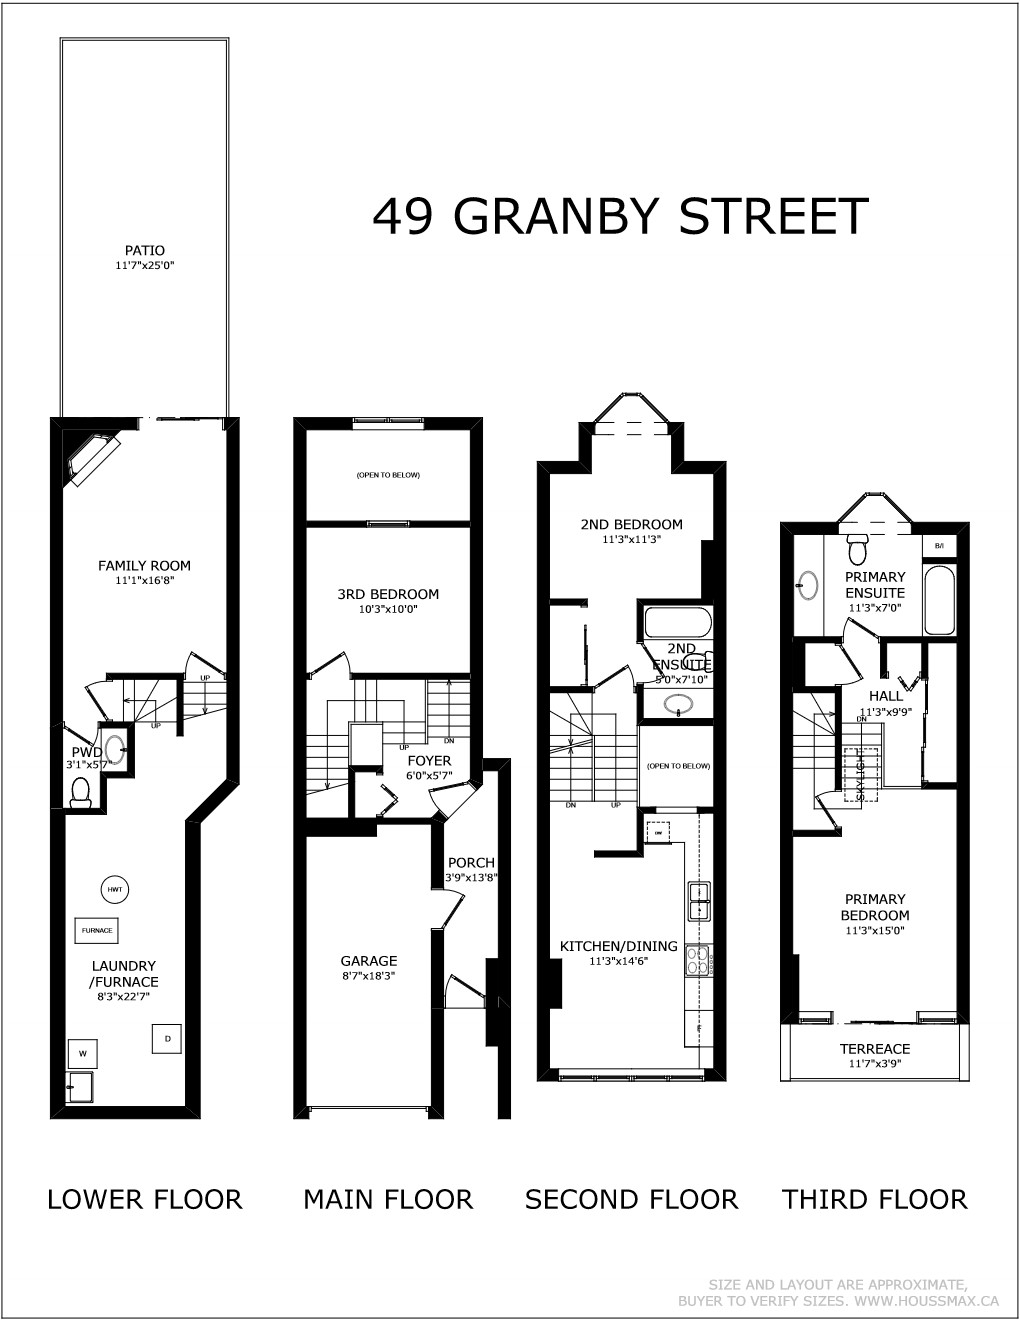 Floor plans for 49 Granby St